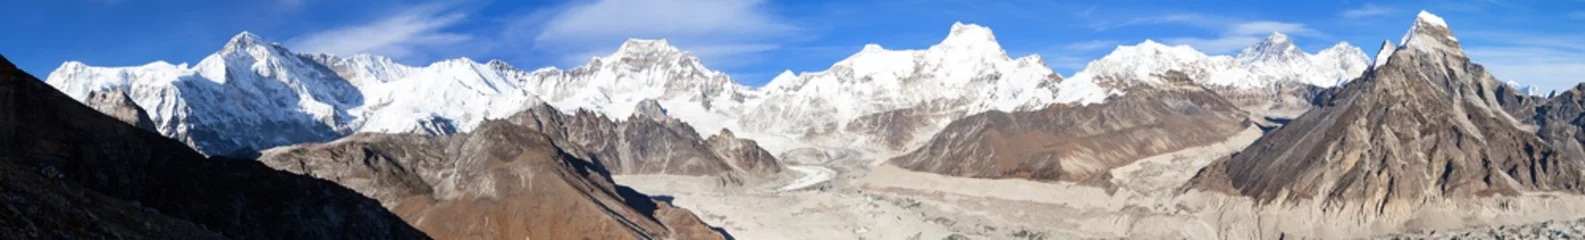 Photo sur Plexiglas Cho Oyu mount Everest and Lhotse, Nepal Himalayas mountains